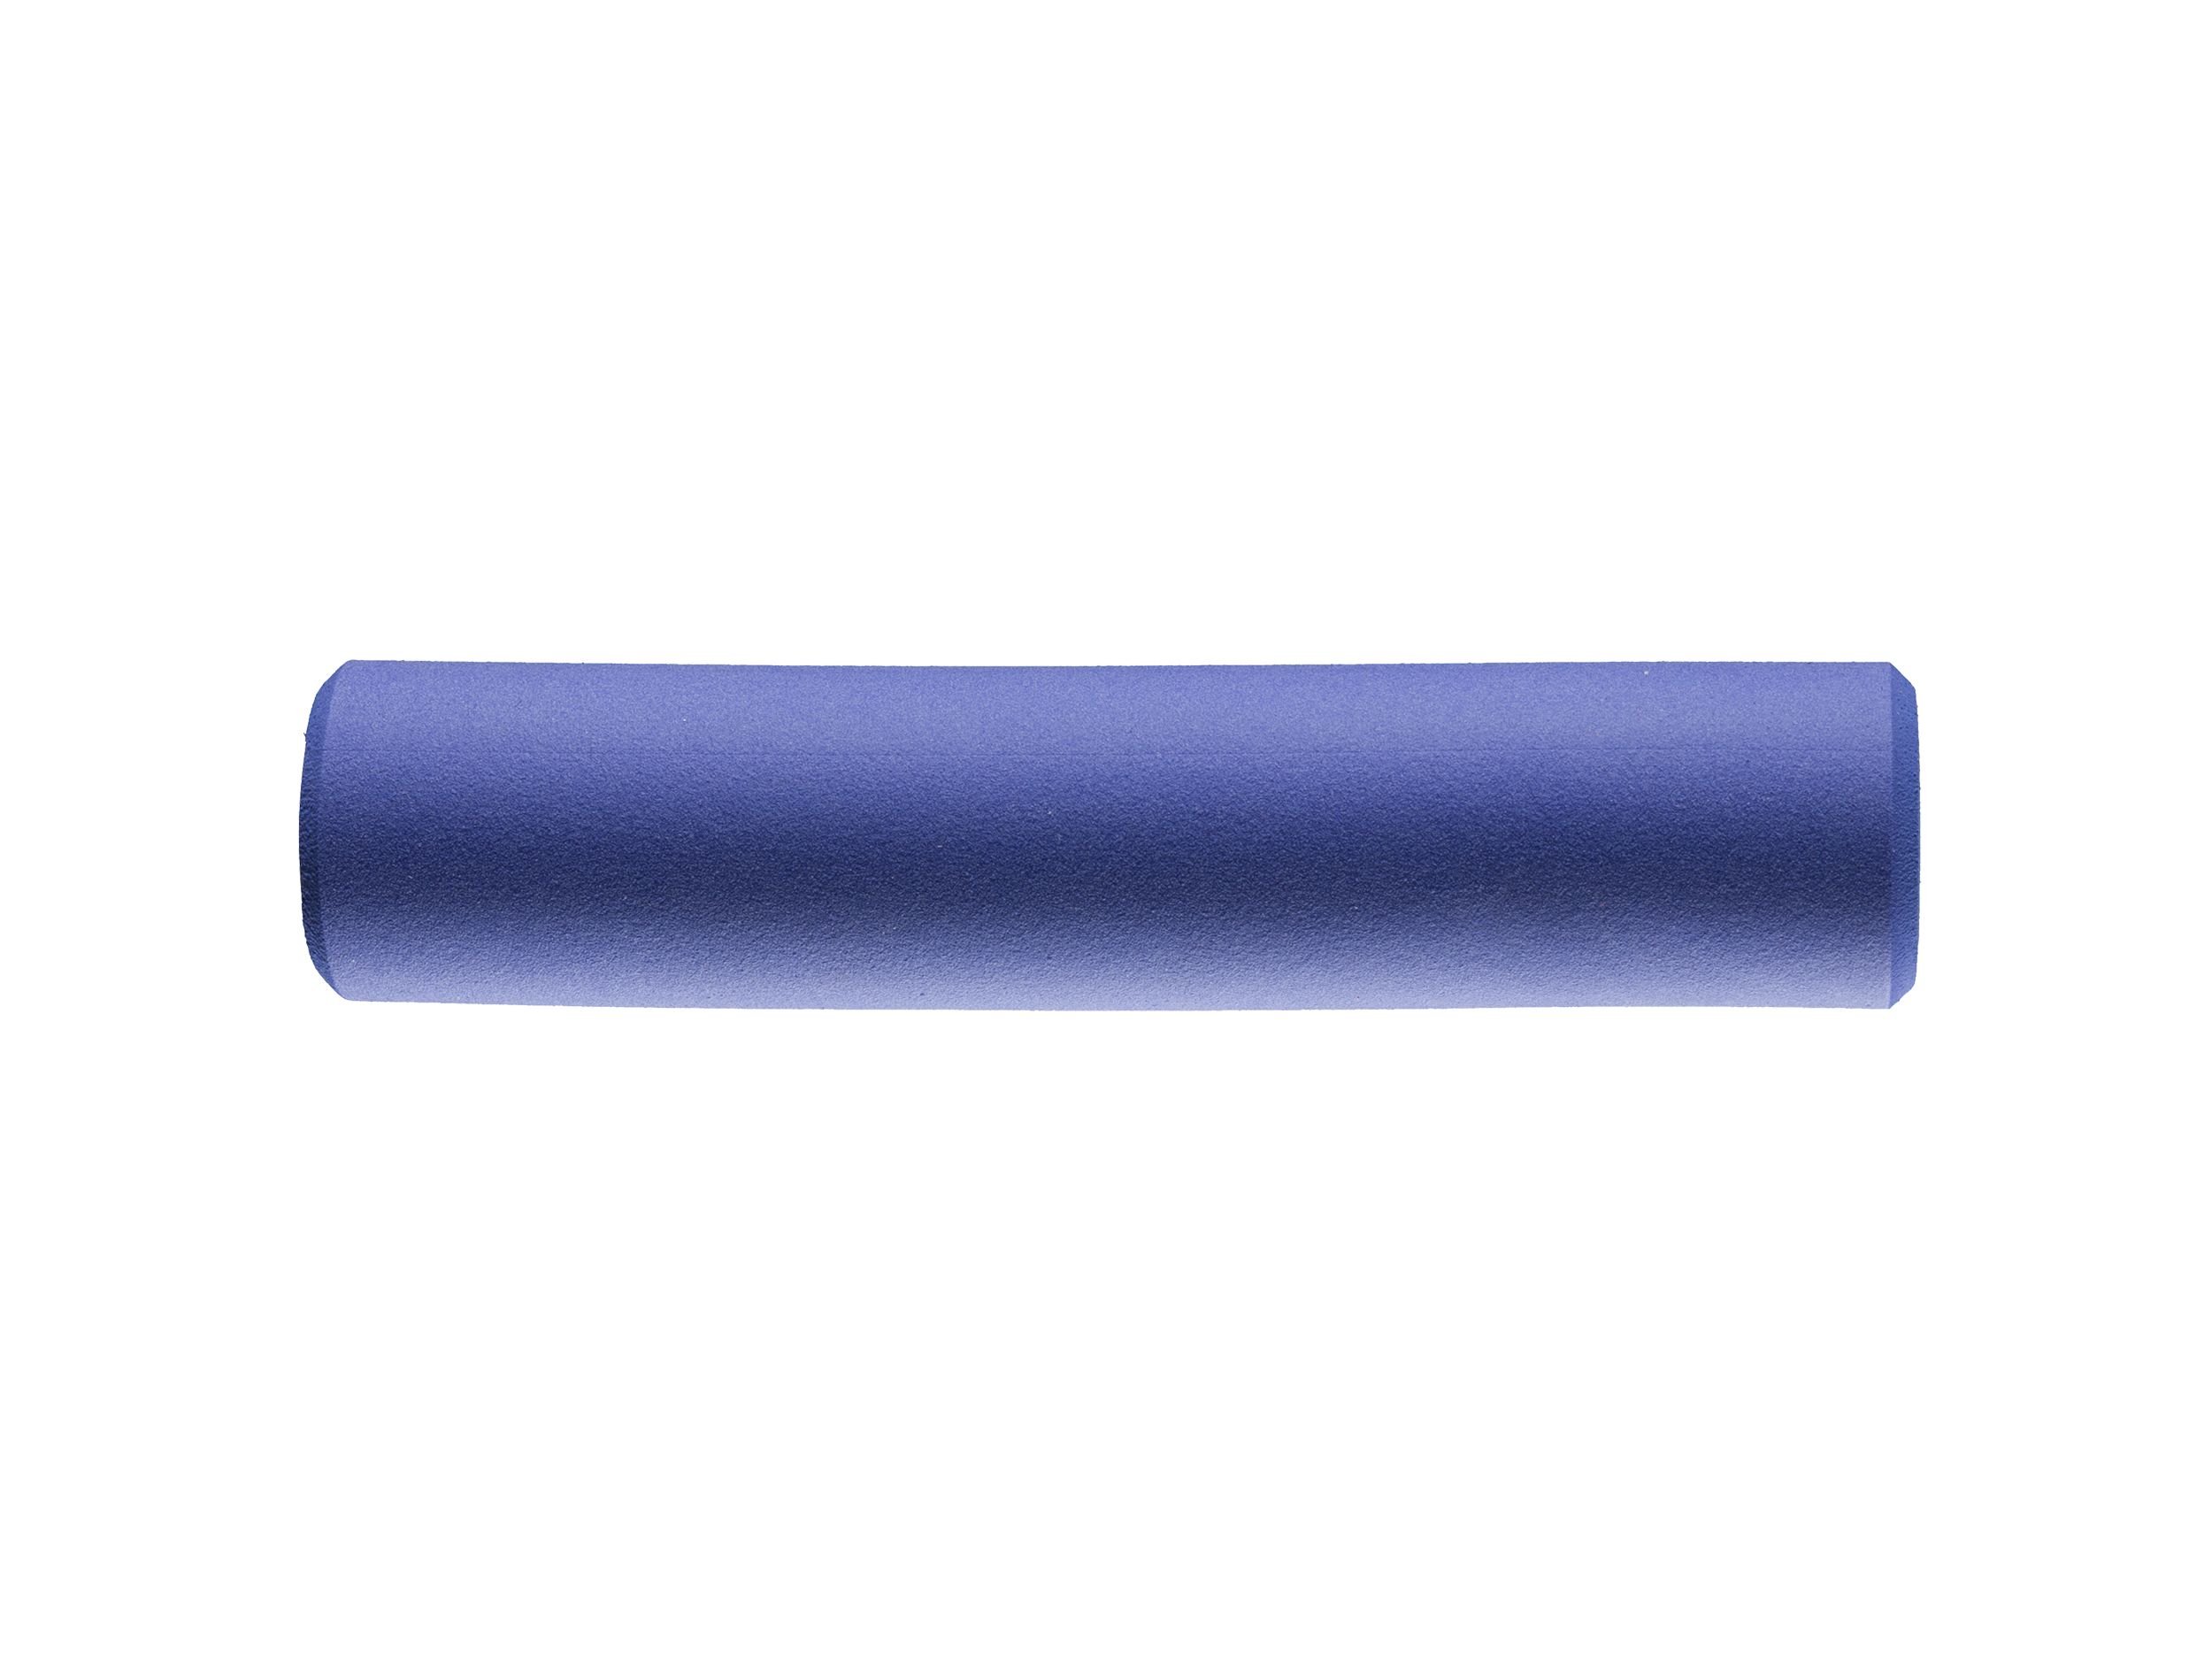 Poignée Bontrager XR Silicone Bleu